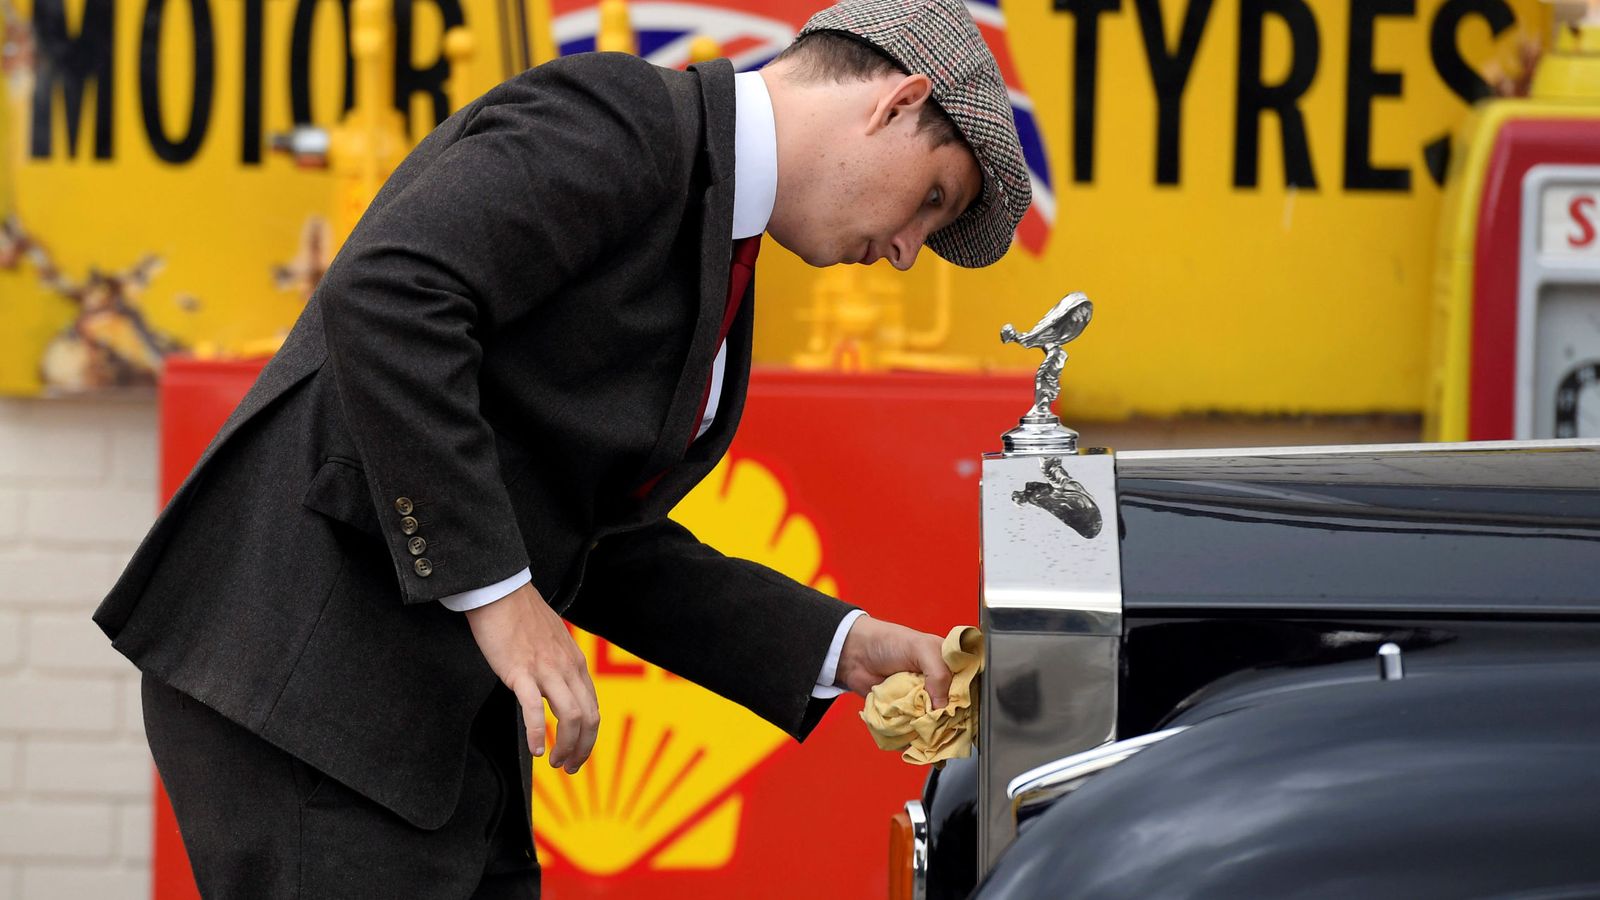 Foto: Un hombre limpia la carrocería de un Rolls Royce en el certamen de coches históricos de Goodwood, Inglaterra. (Reuters)